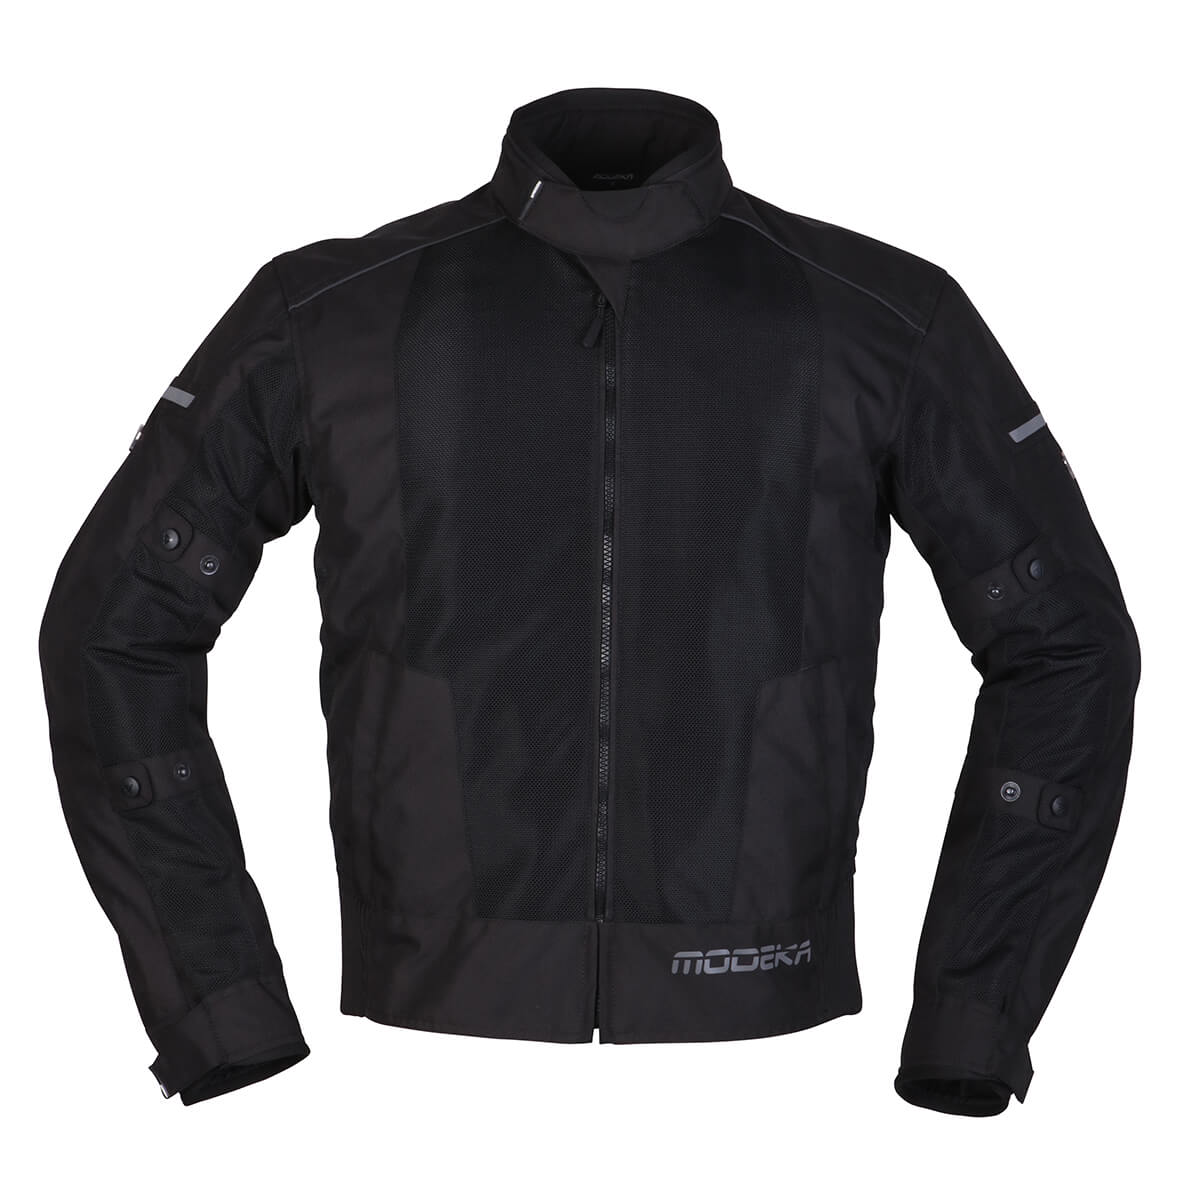 Image of Modeka Veo Air Jacket Black Size 2XL ID 4045765189719